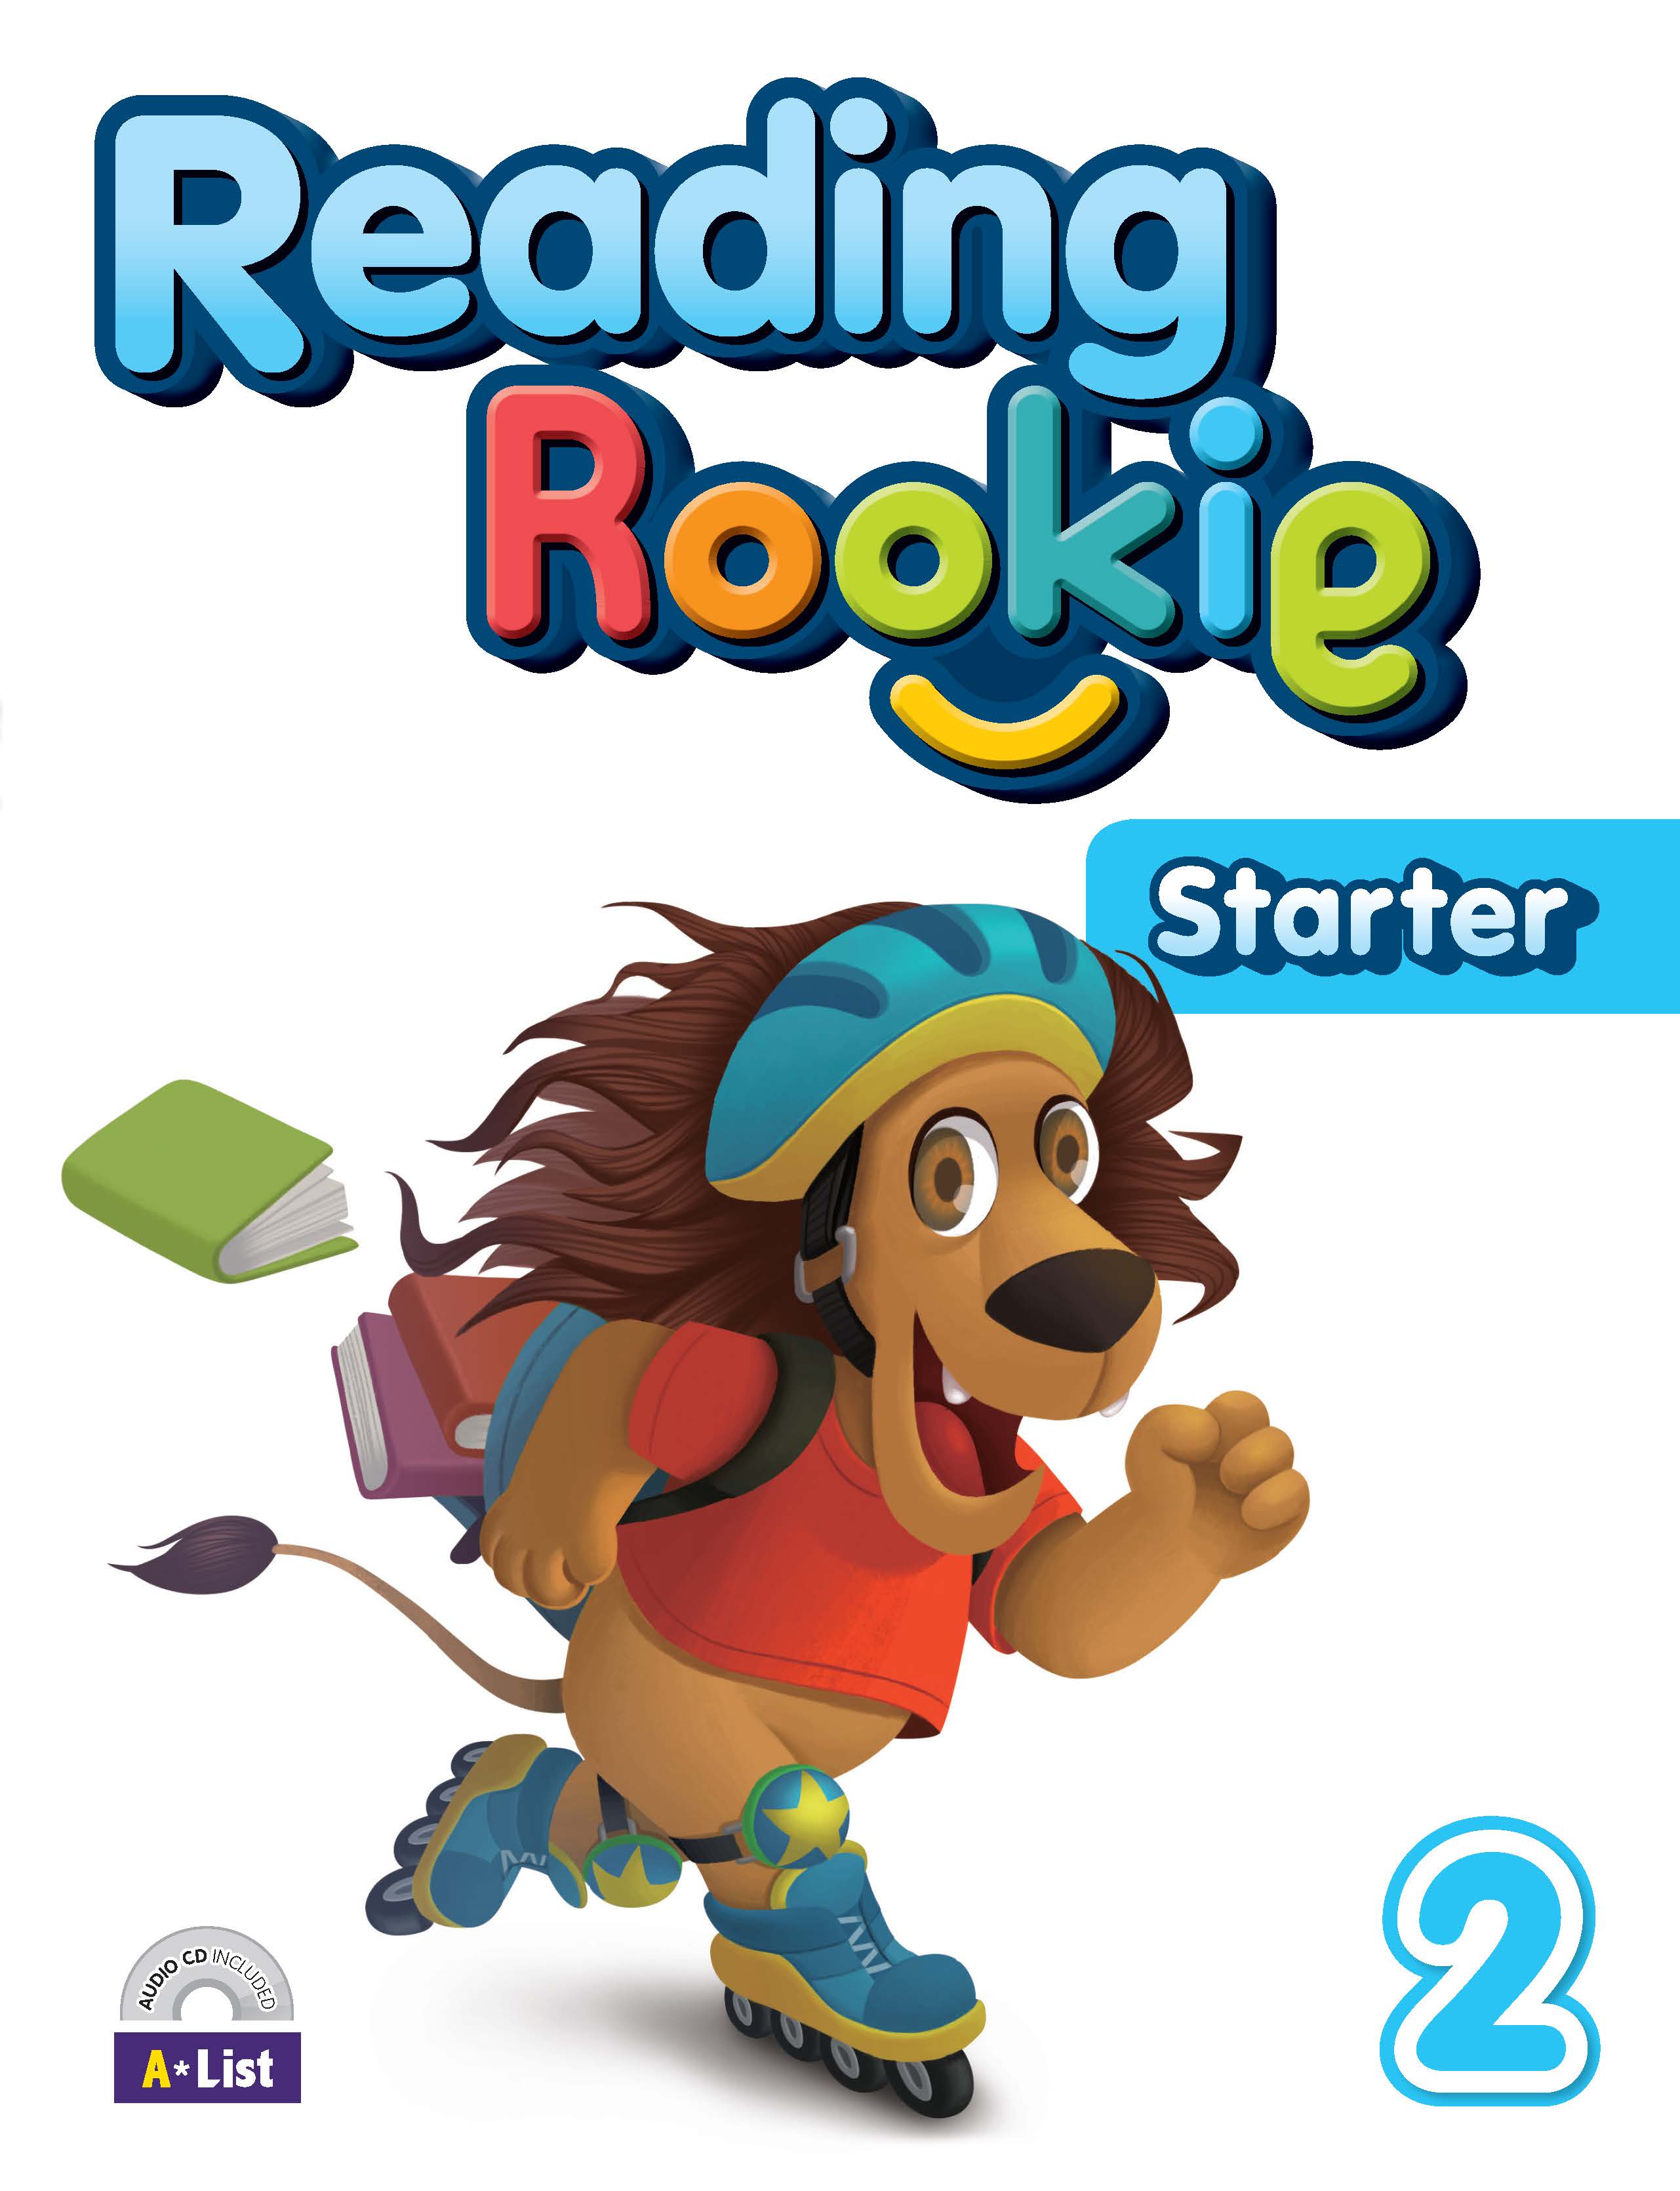 Reading Rookie Starter 2